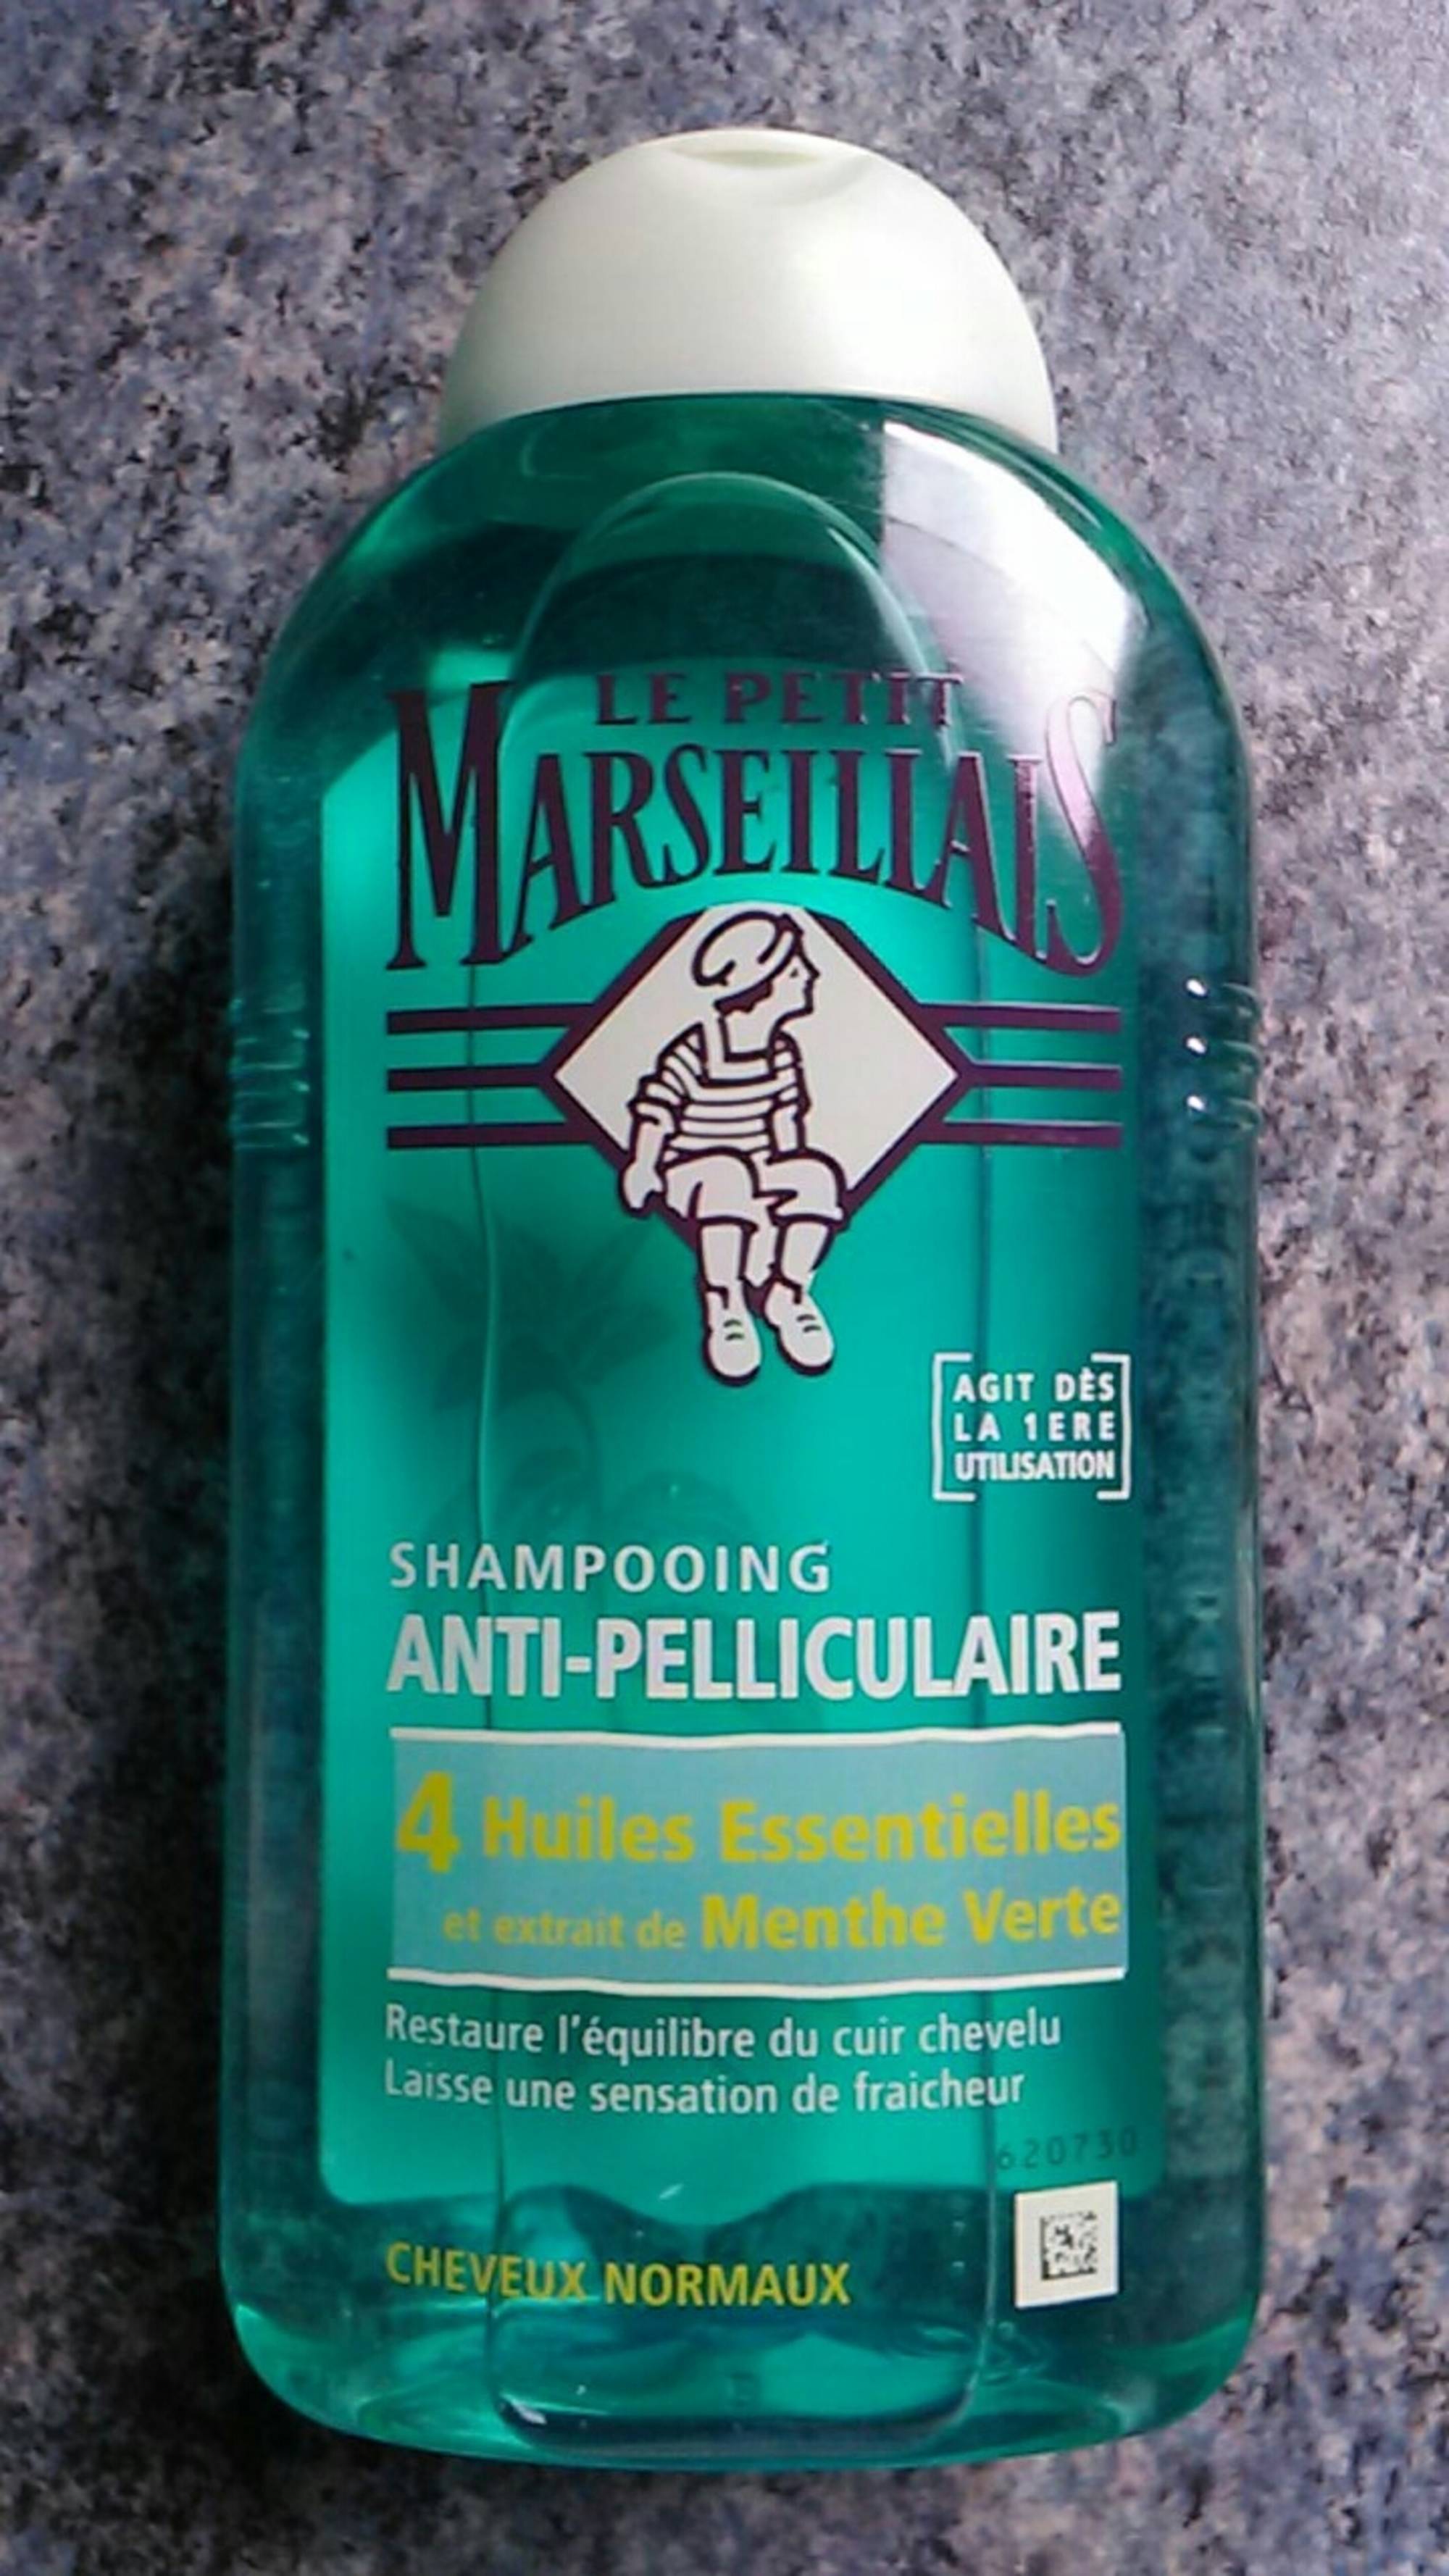 LE PETIT MARSEILLAIS - Anti-pelliculaire - Shampooing cheveux normaux